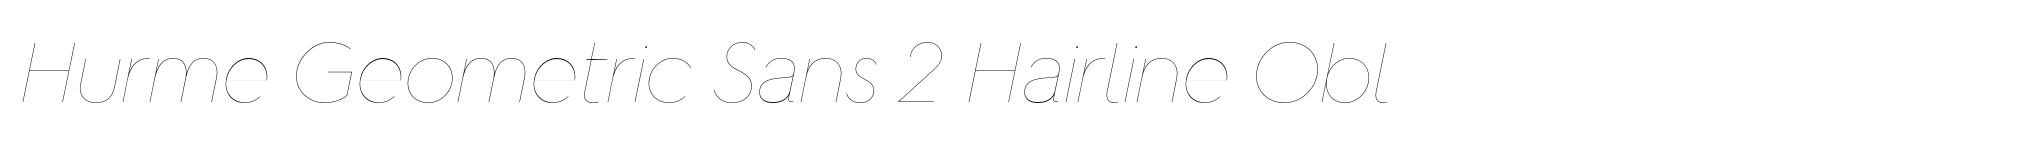 Hurme Geometric Sans 2 Hairline Obl image